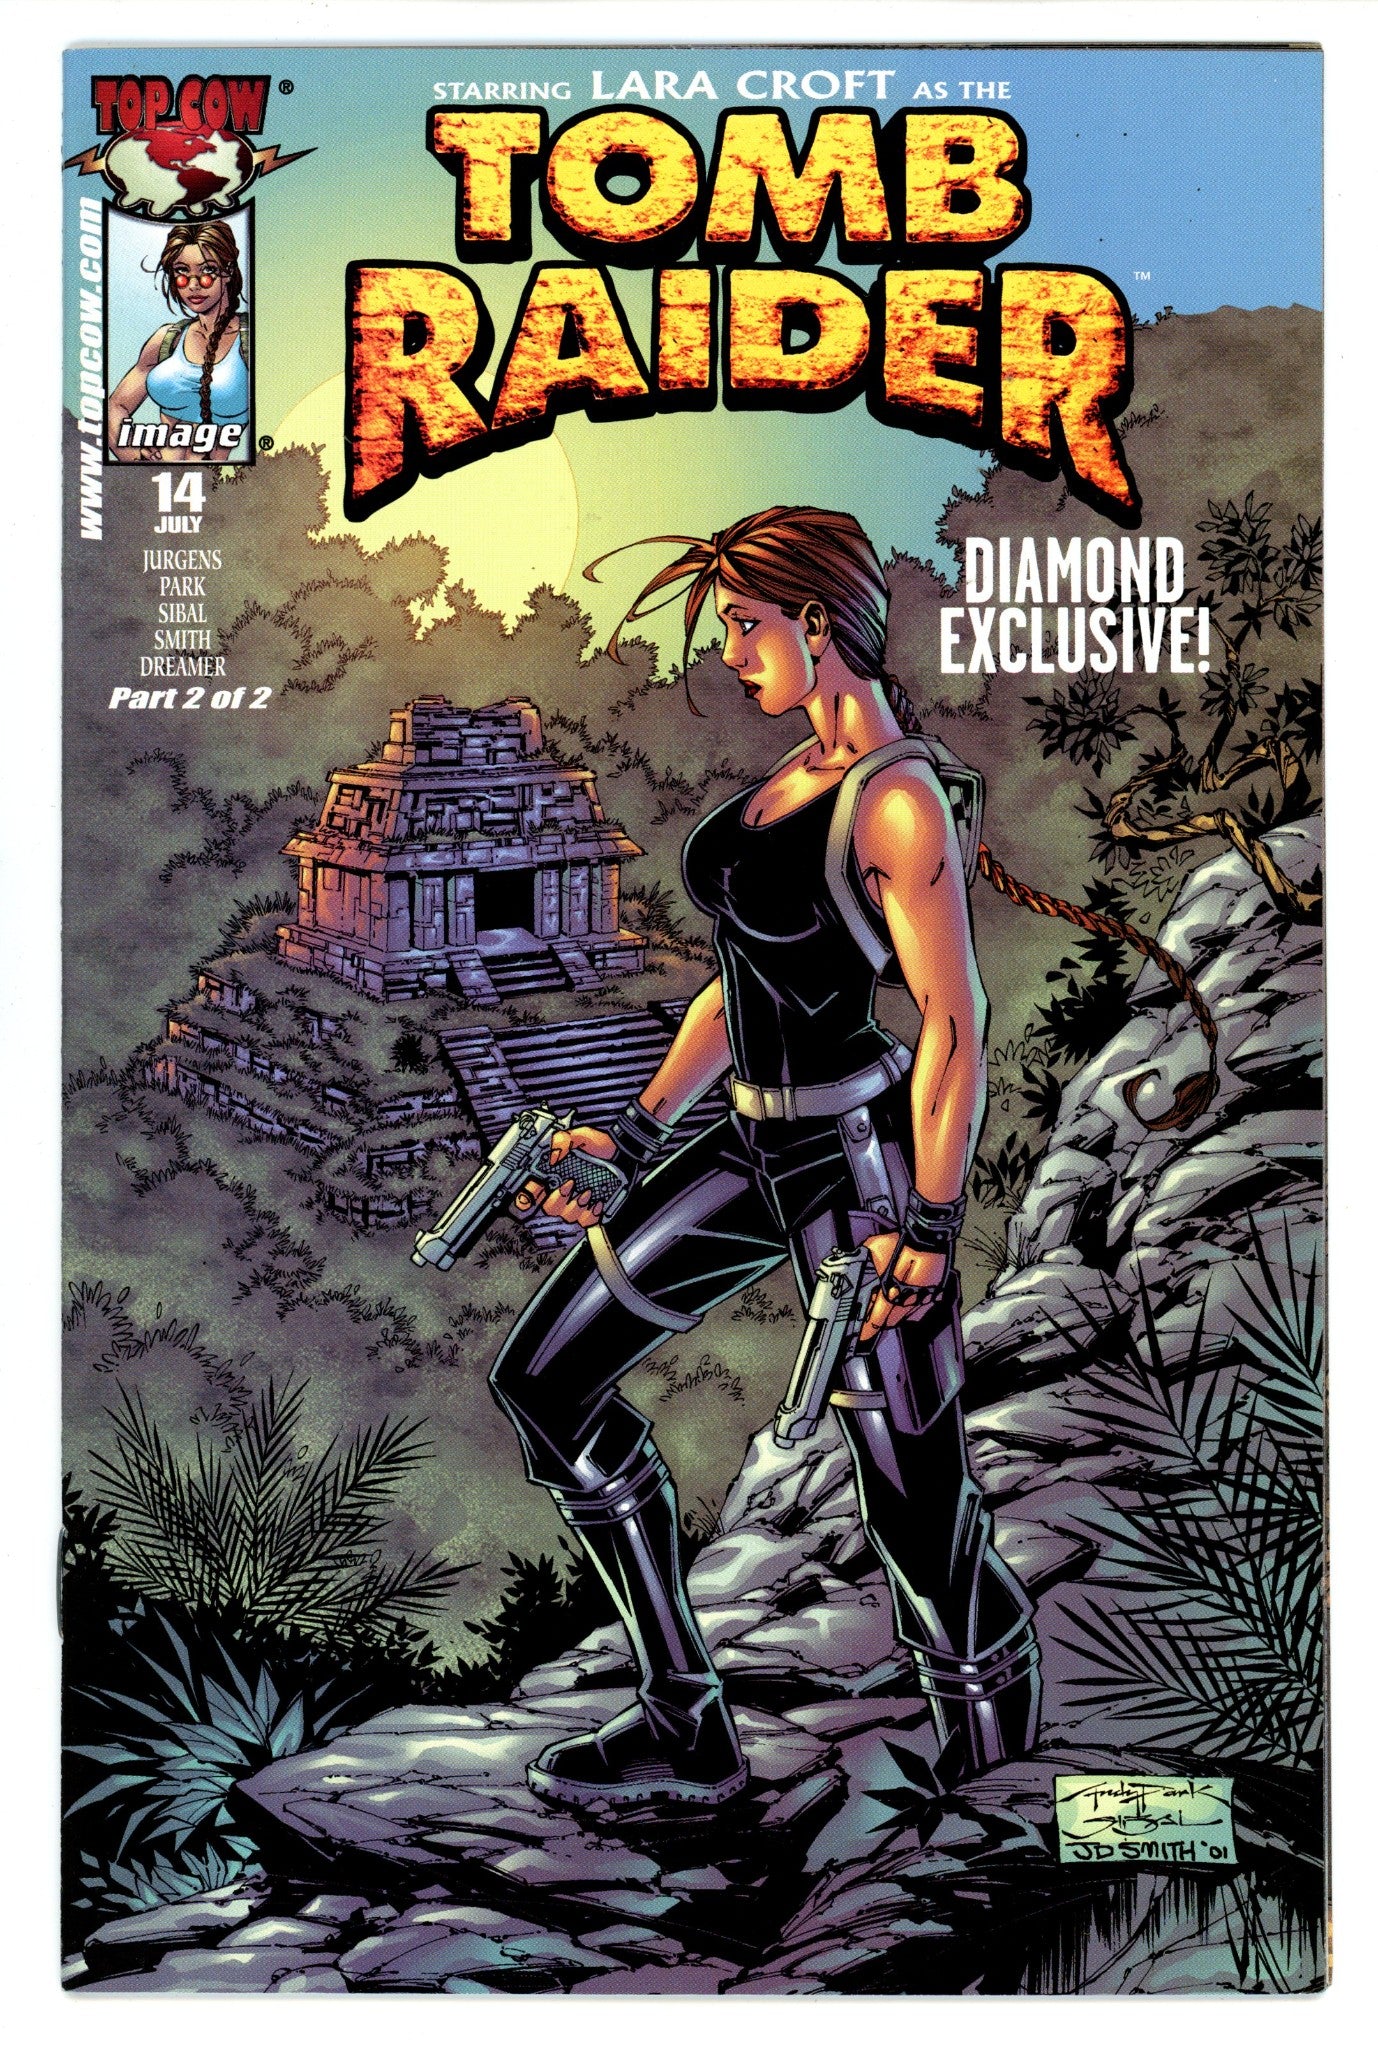 Tomb Raider: The Series Vol 1 14 High Grade (2001) Park Exclusive Variant 